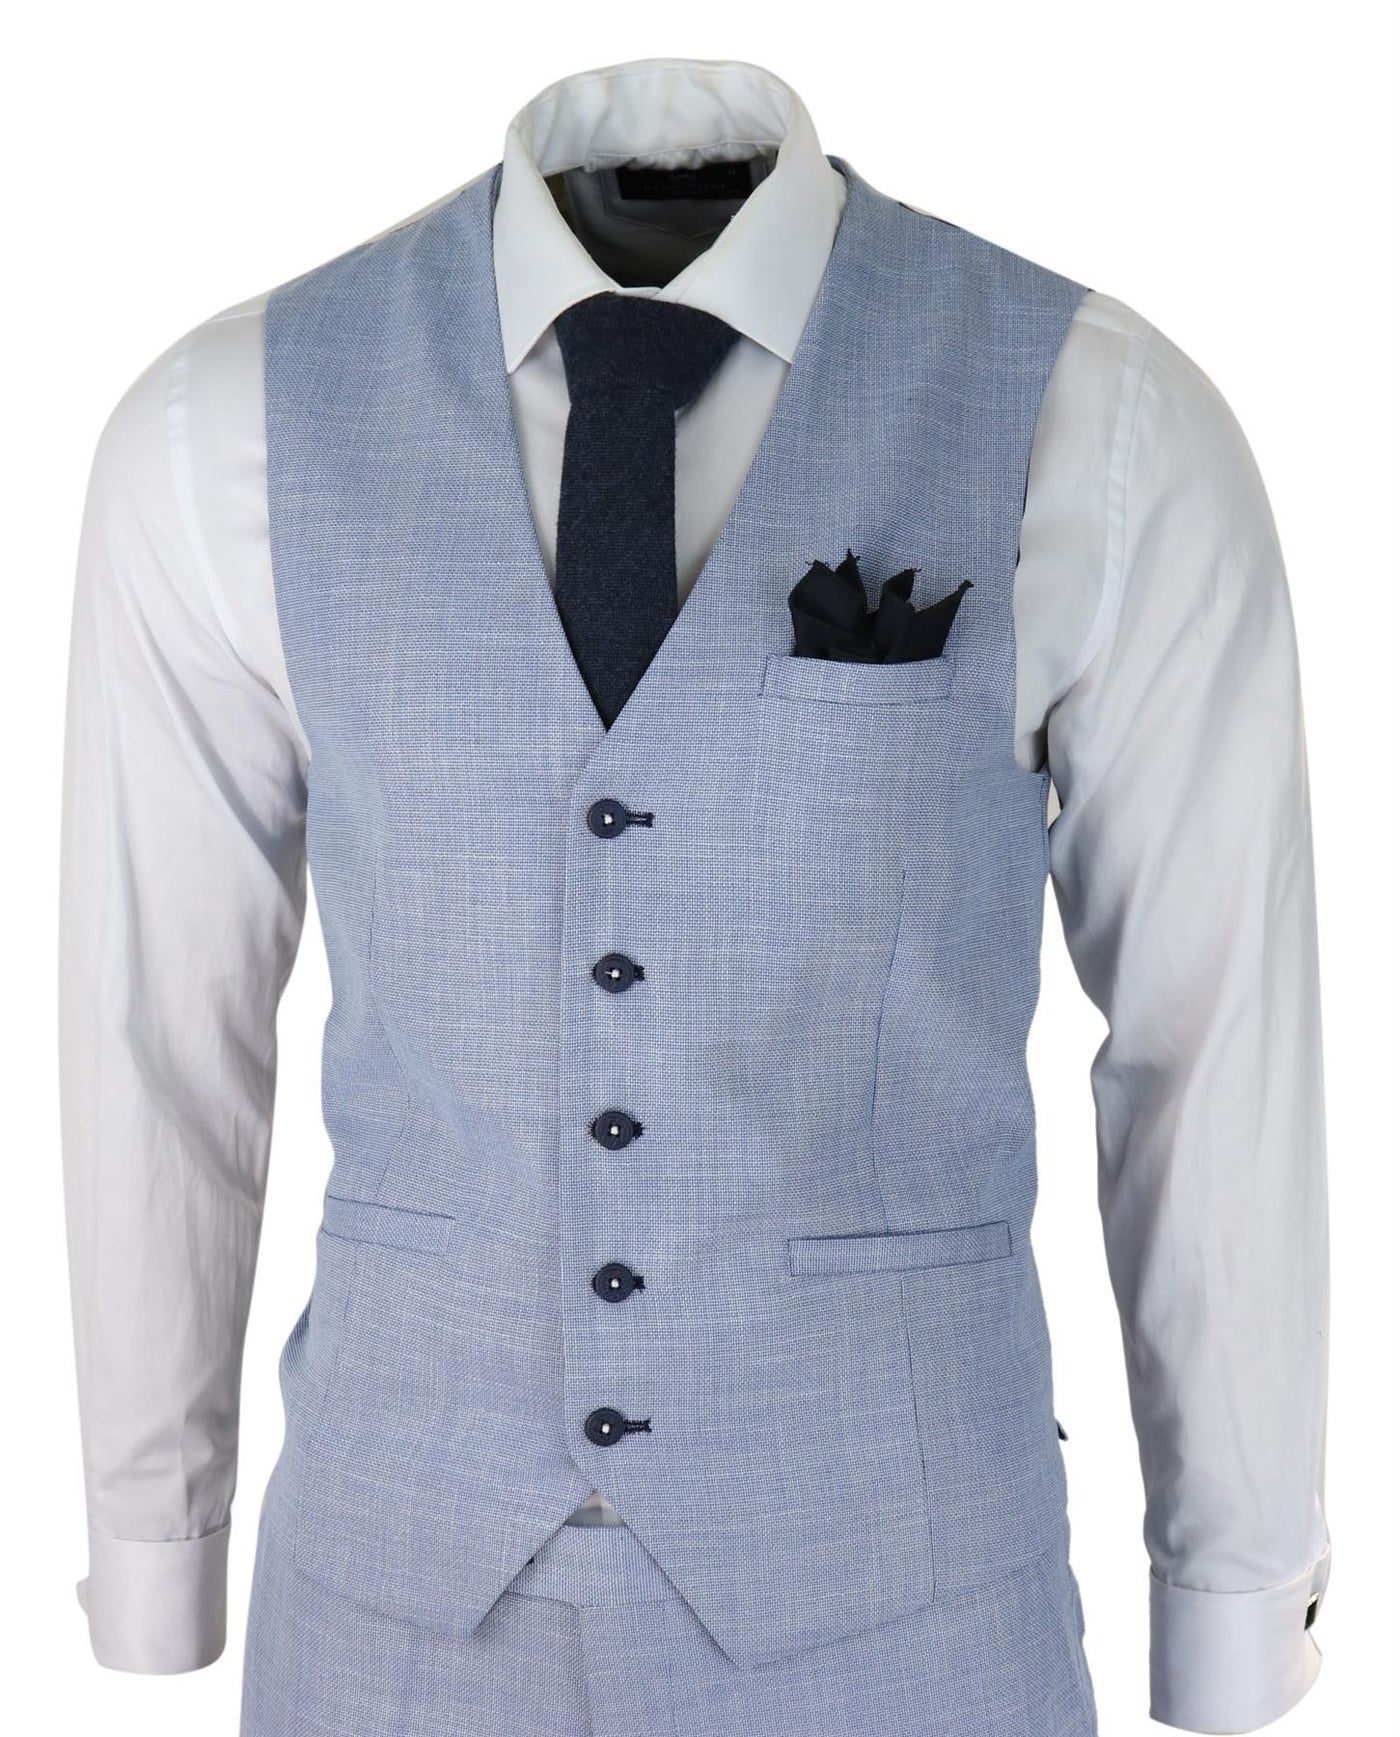 Mens 3 Piece Linen Suit Light Blue Summer Tailored Fit Wedding Prom Classic Suit